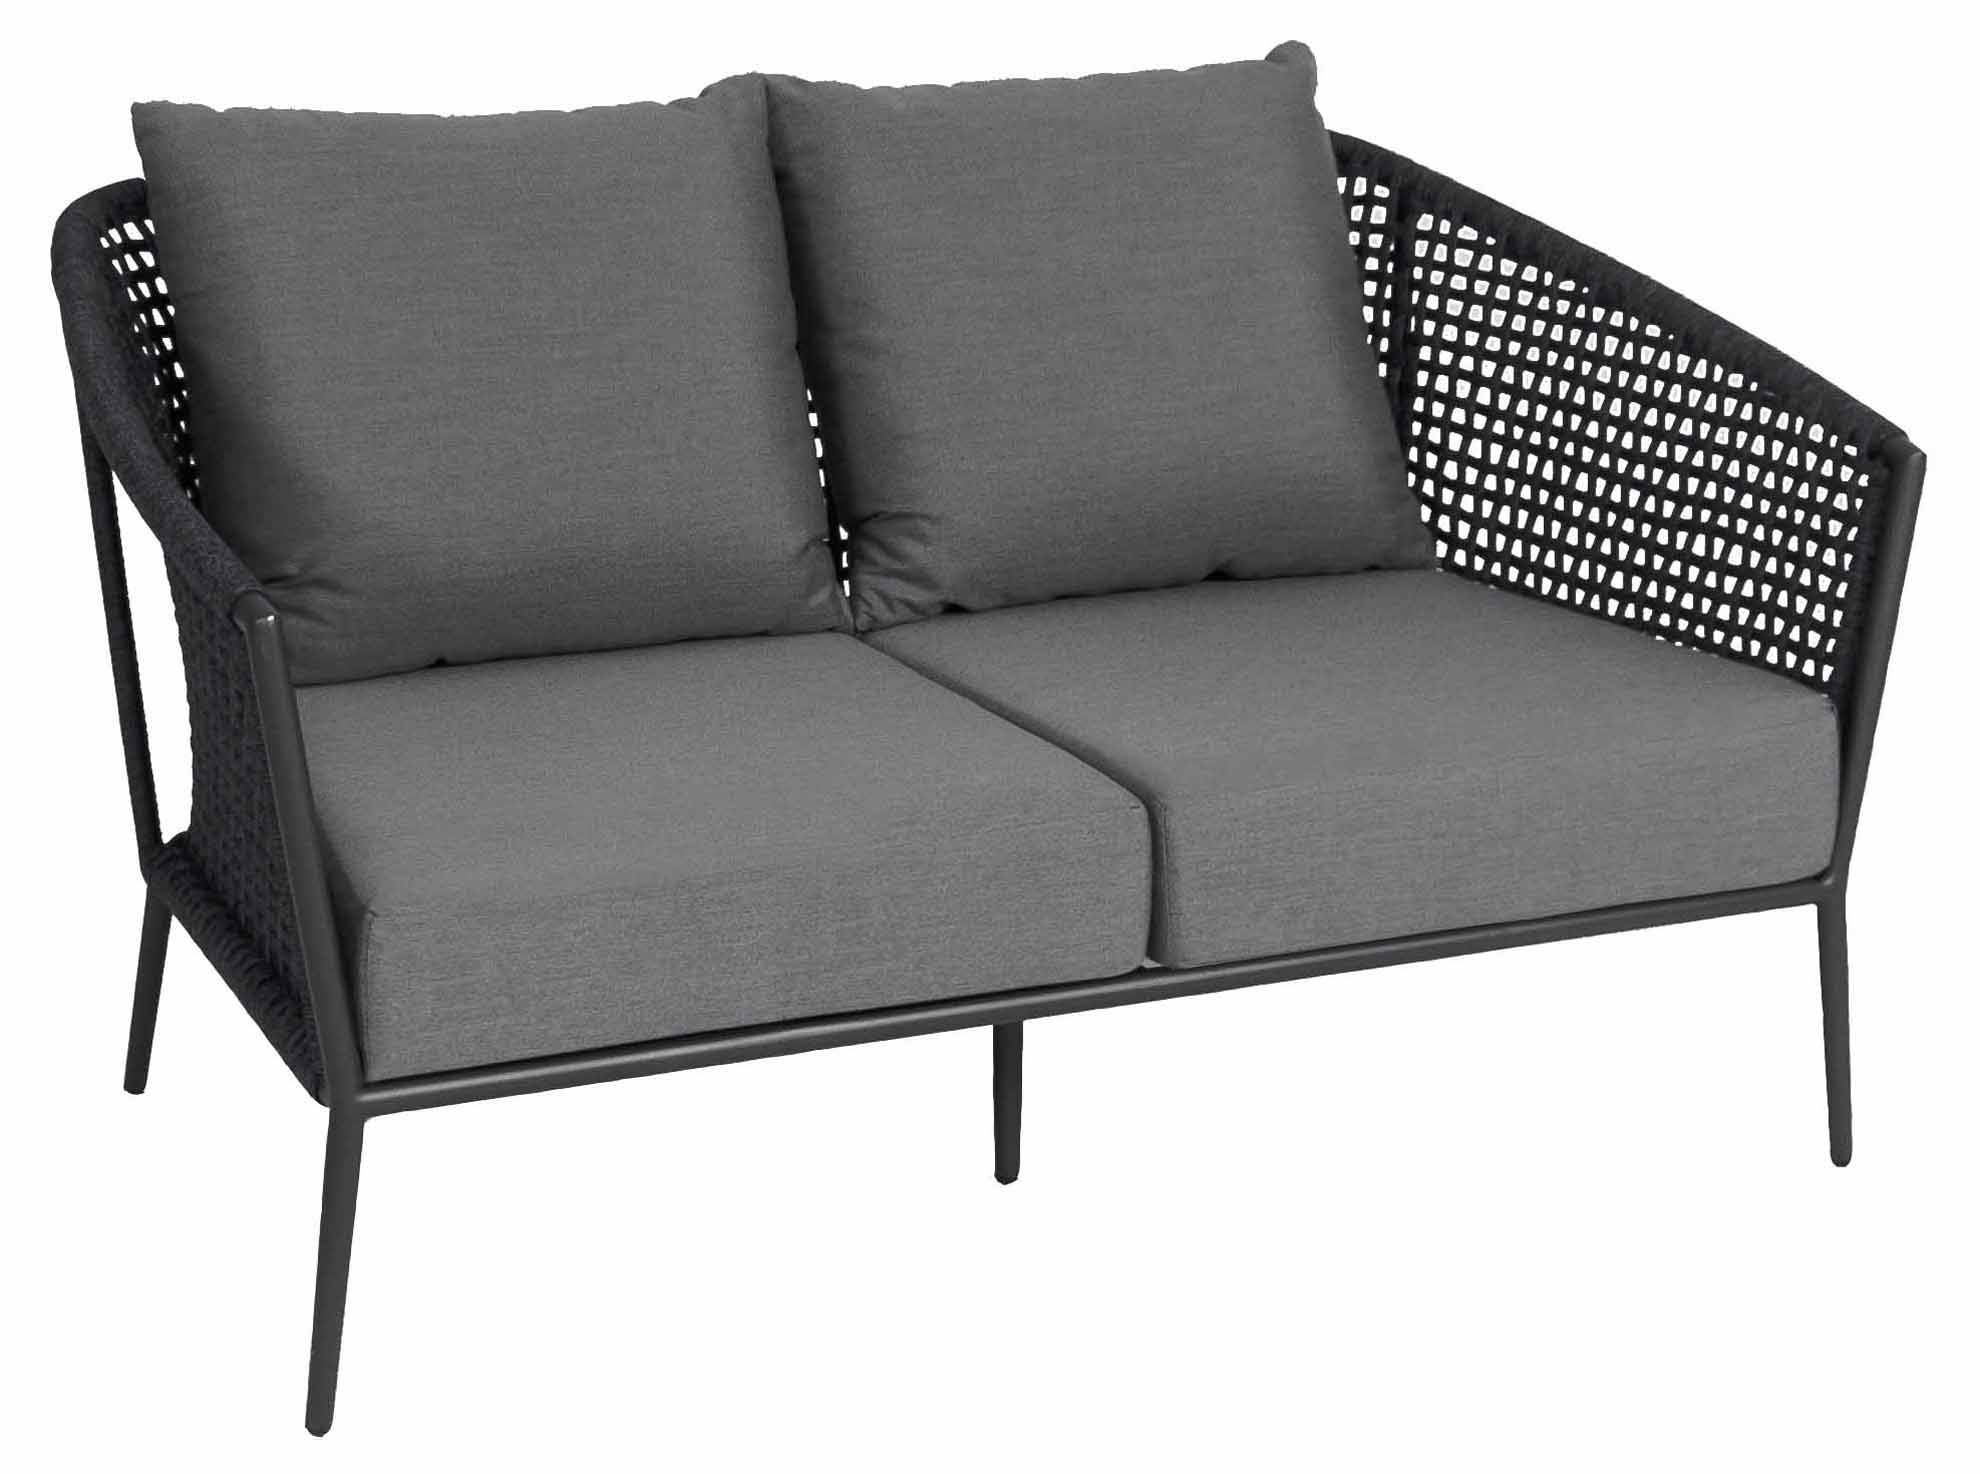 Jati & (open Lounge Safara Kissen eisengrau/schwarz weaving), 2-Sitzer cast slate Kebon Sofa